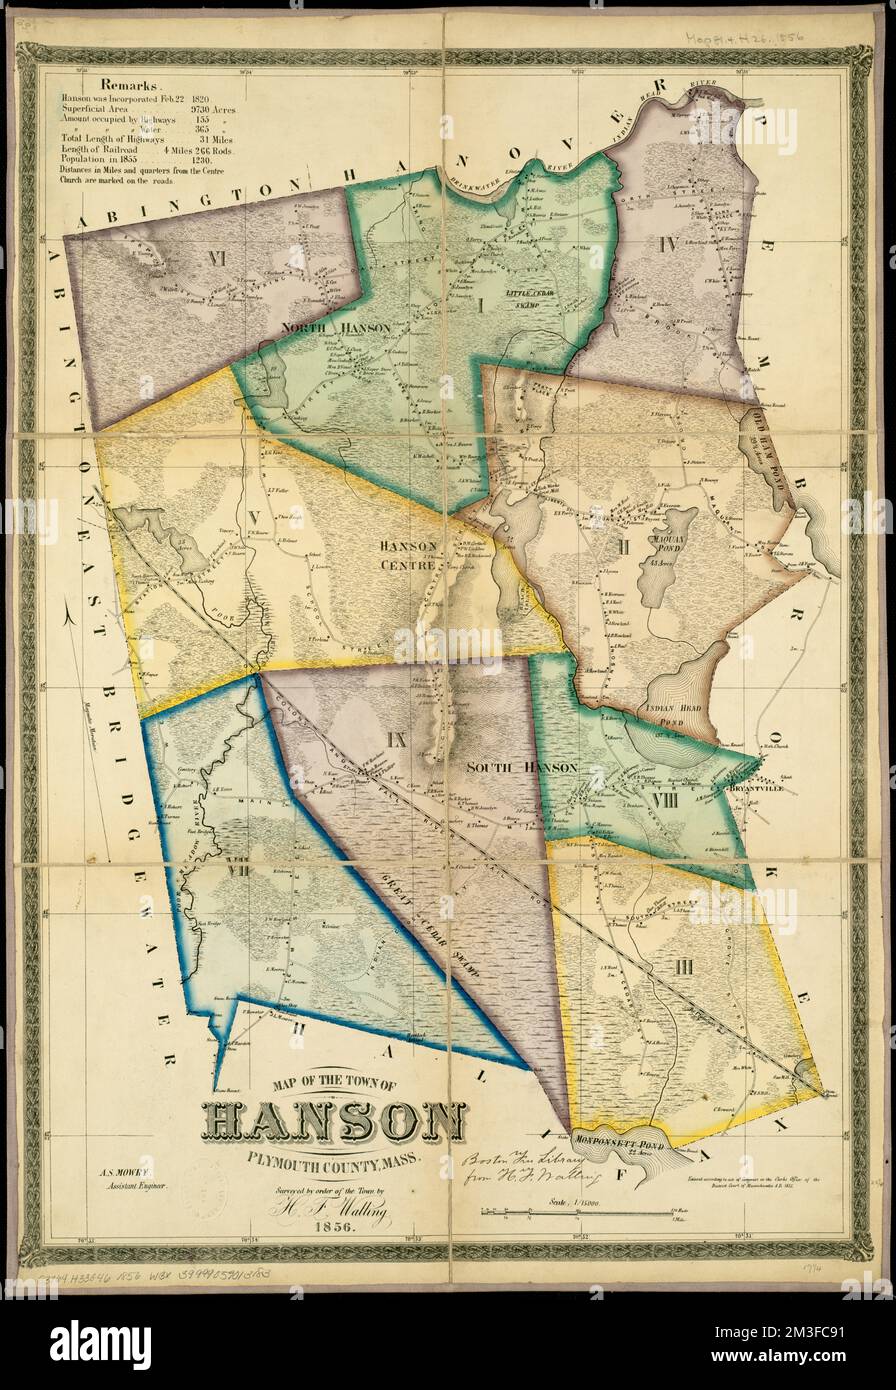 Town of Hanson, MA